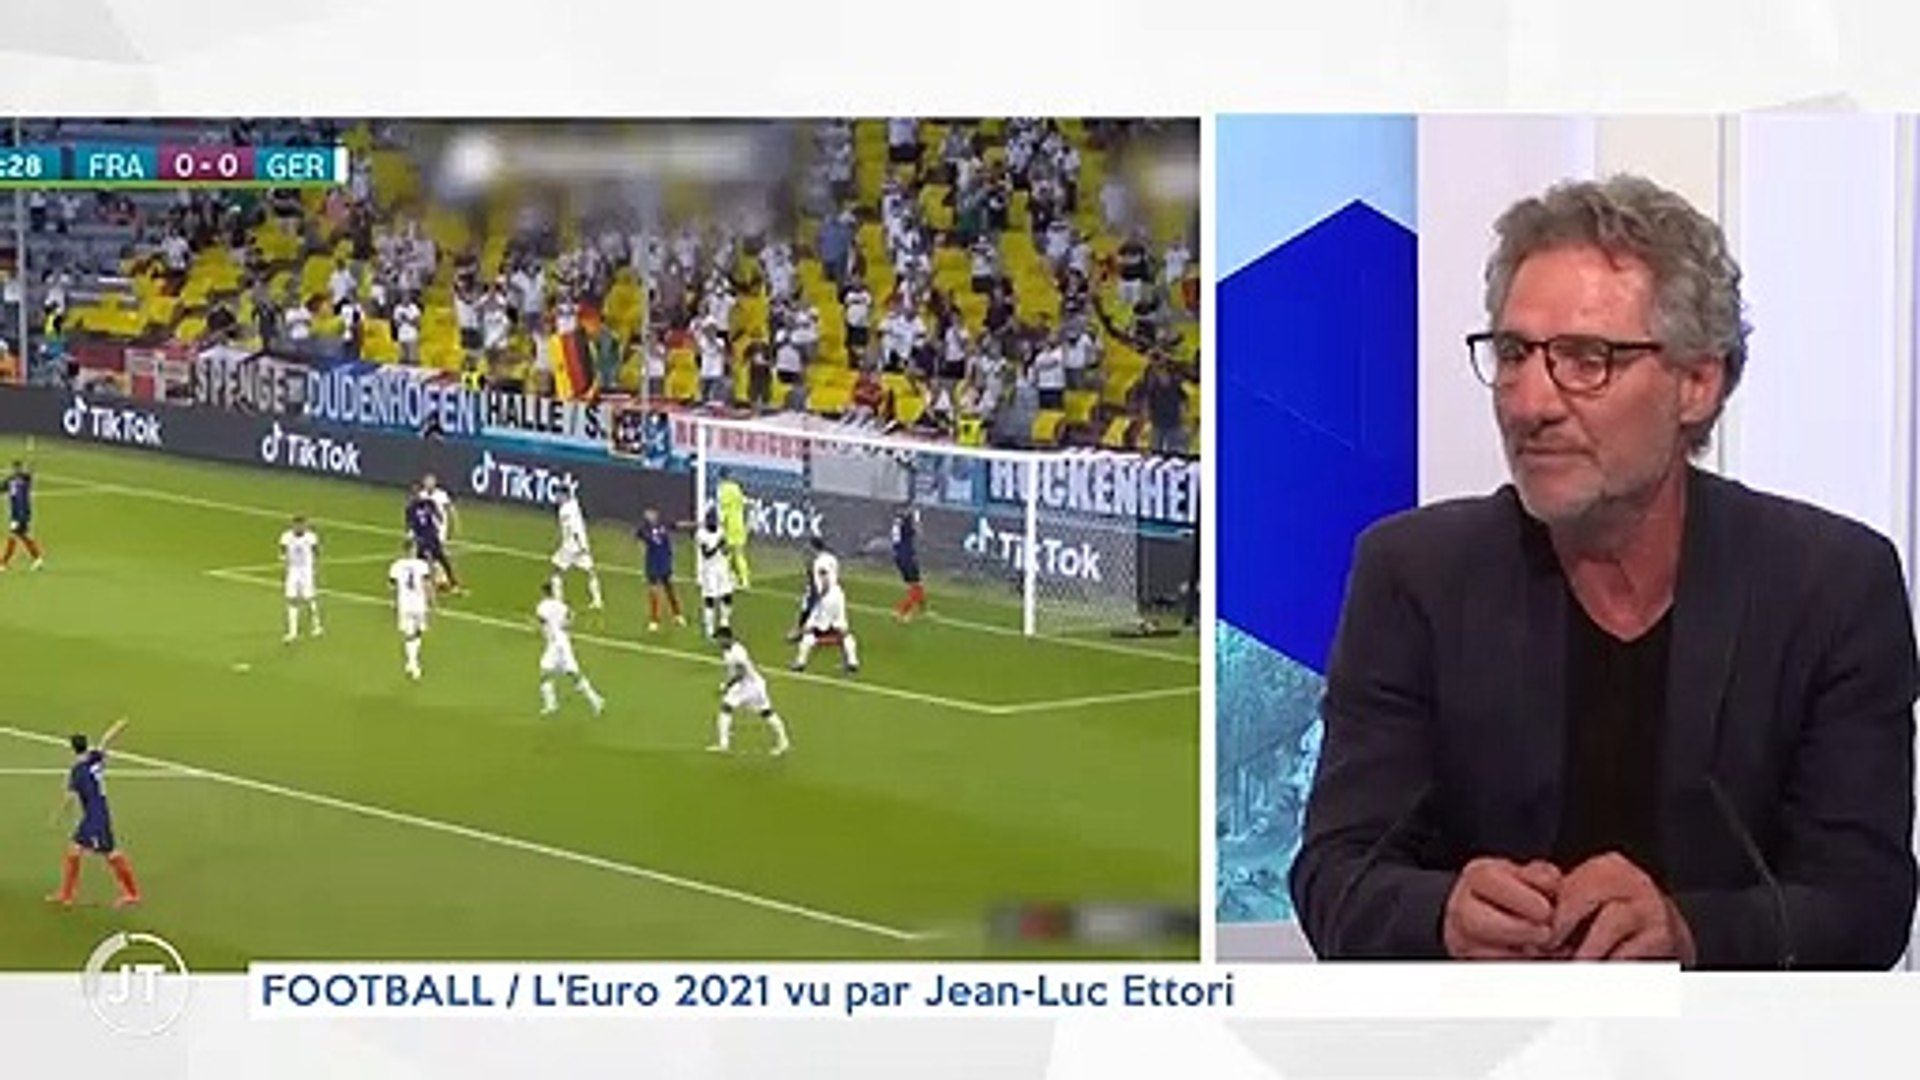 FOOTBALL / L'Euro 2021 vu par Jean-Luc Ettori - Vidéo Dailymotion